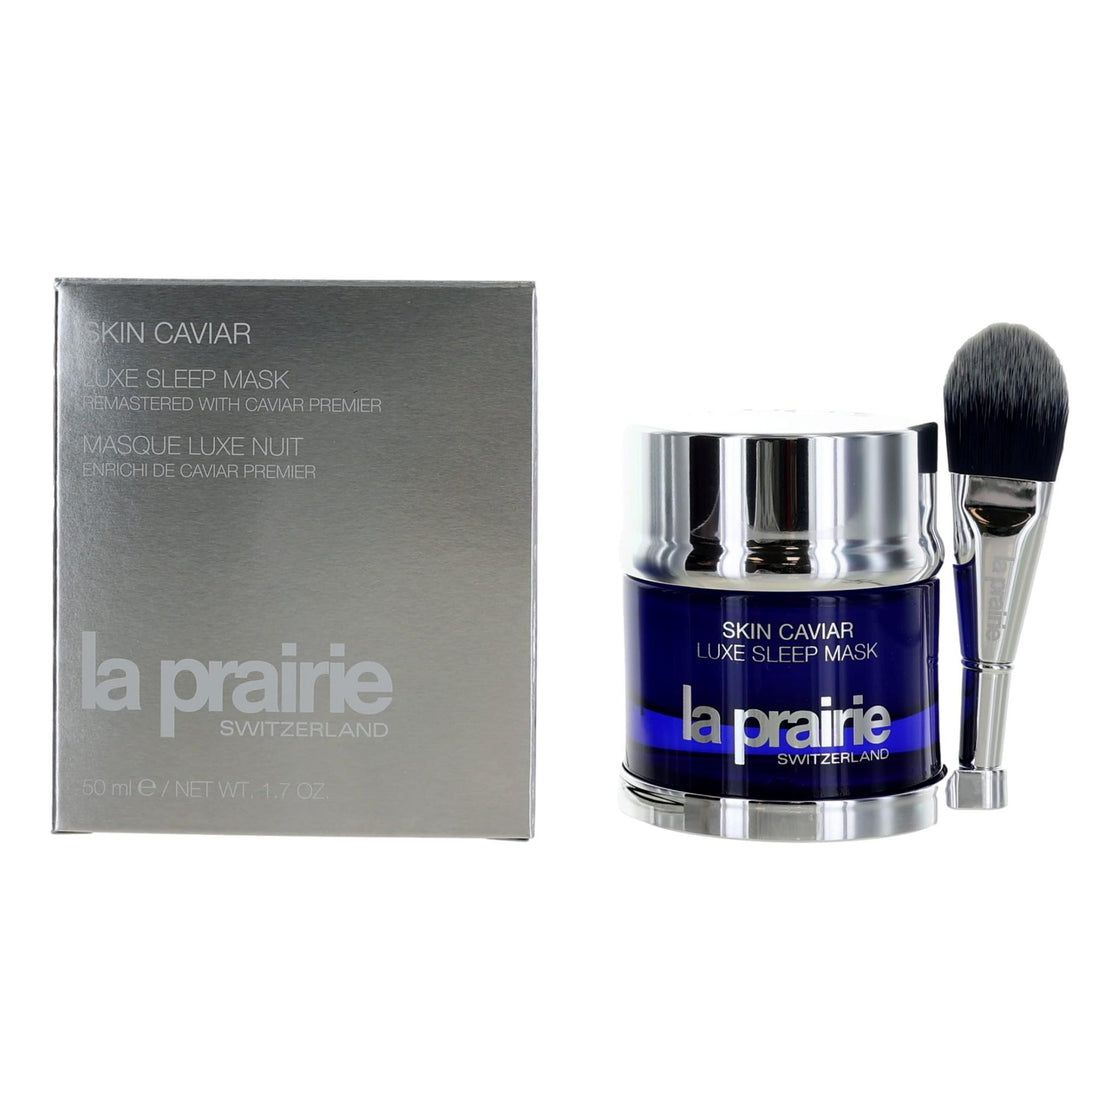 La Prairie Skin Caviar By La Prairie, 1.7 Oz Luxe Sleep Mask